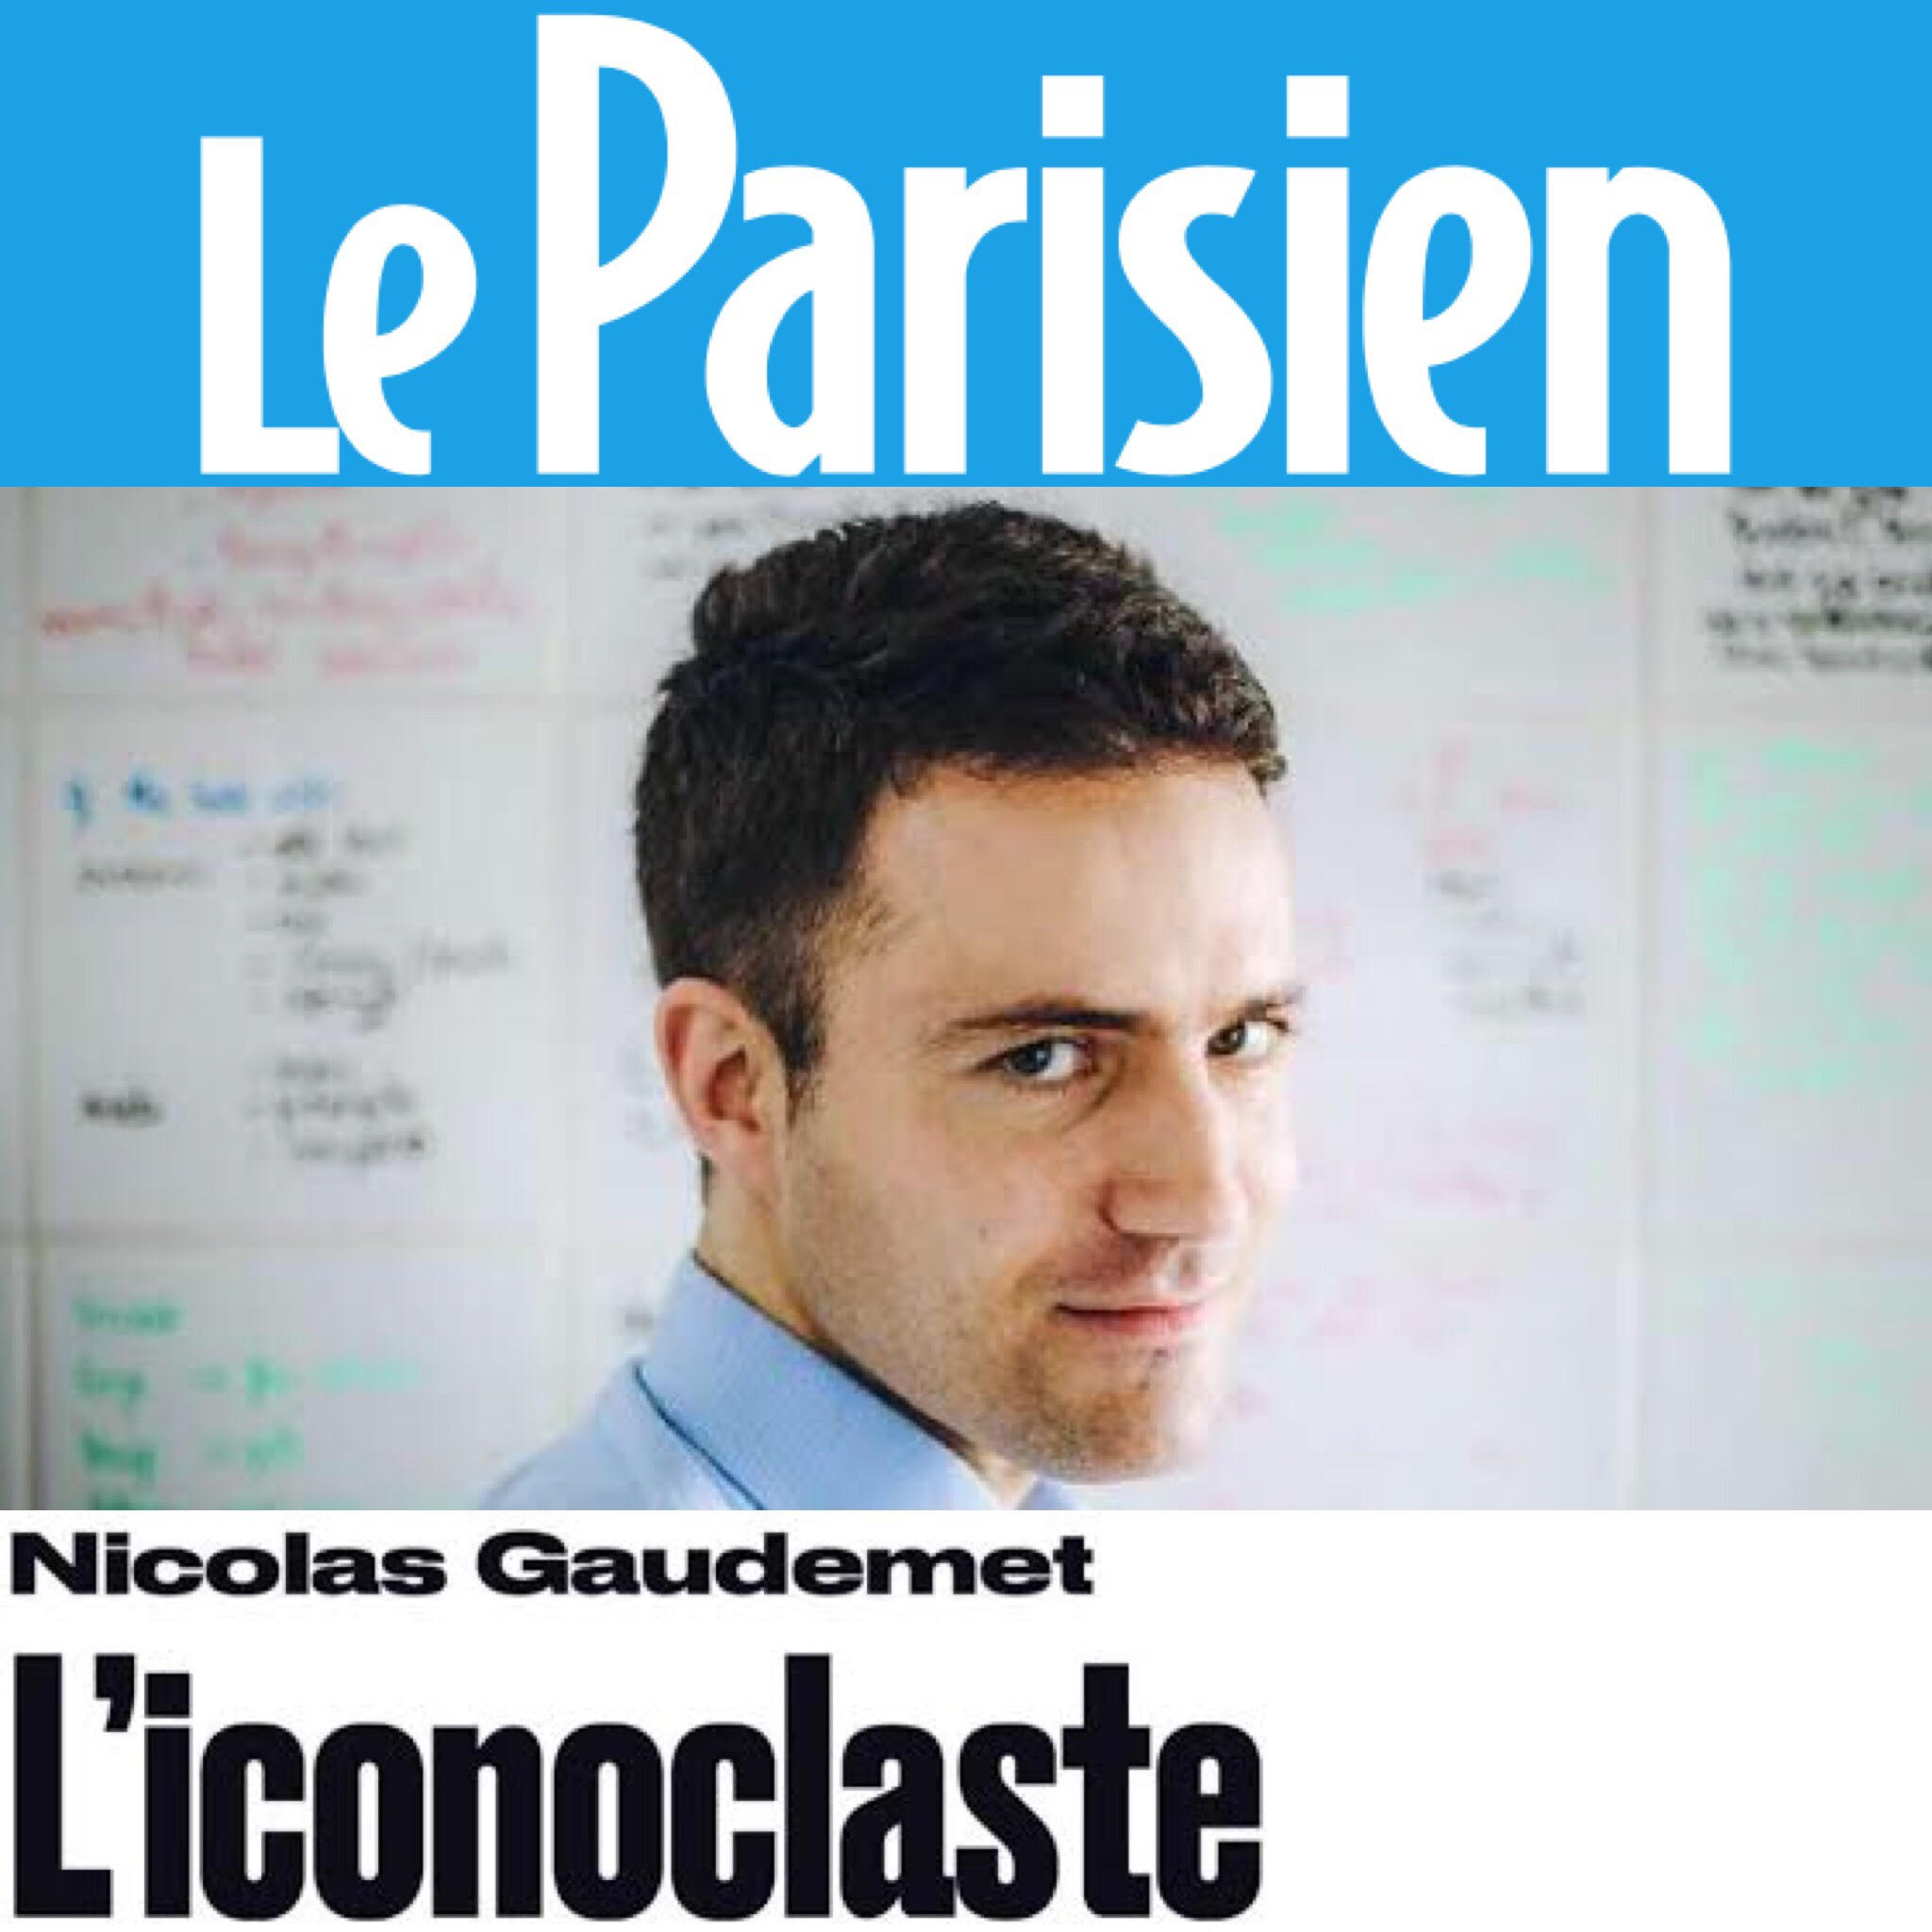 La Fin des idoles de Nicolas Gaudemet dans Le Parisien